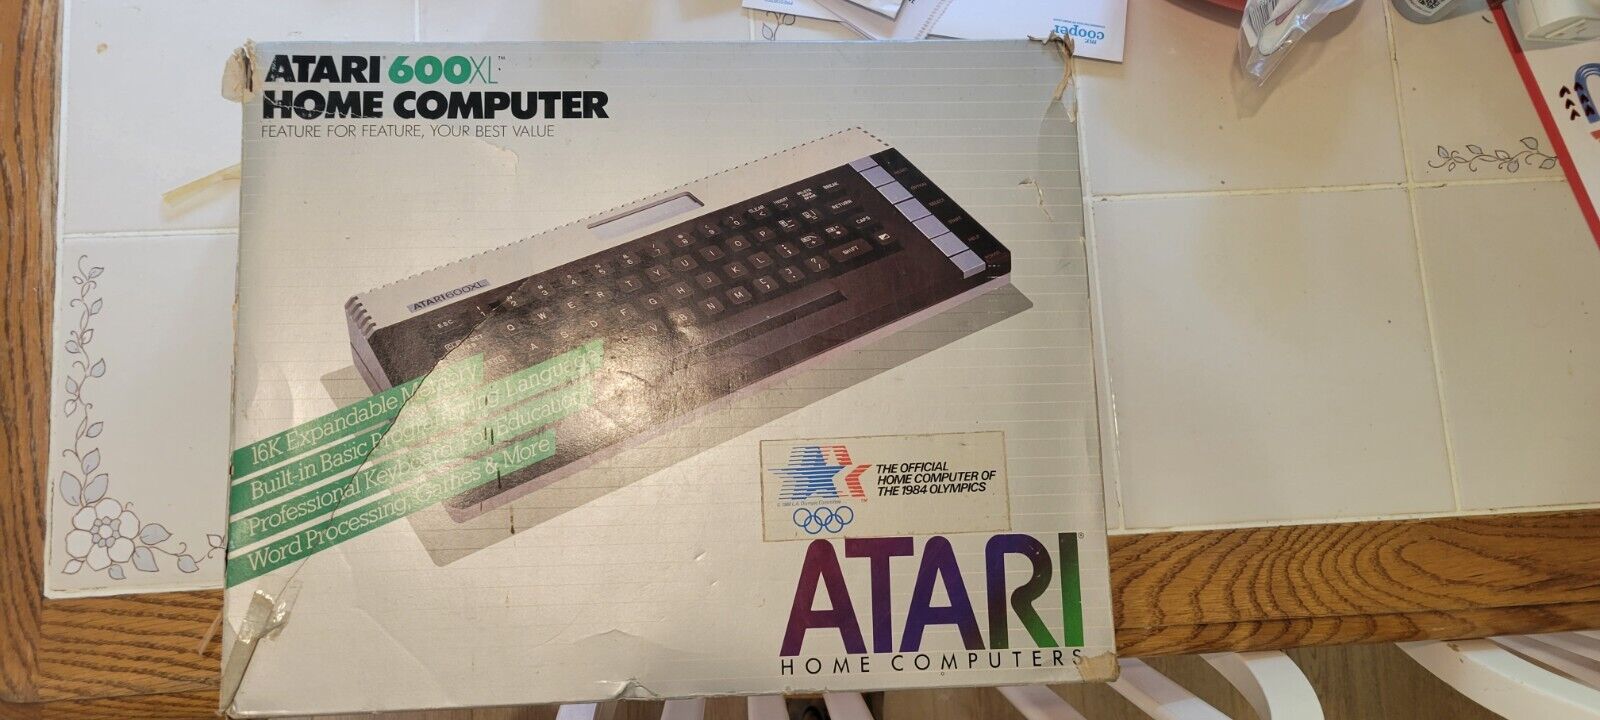 Atari 600 XL Vintage Home Computer - New in Box, Unused